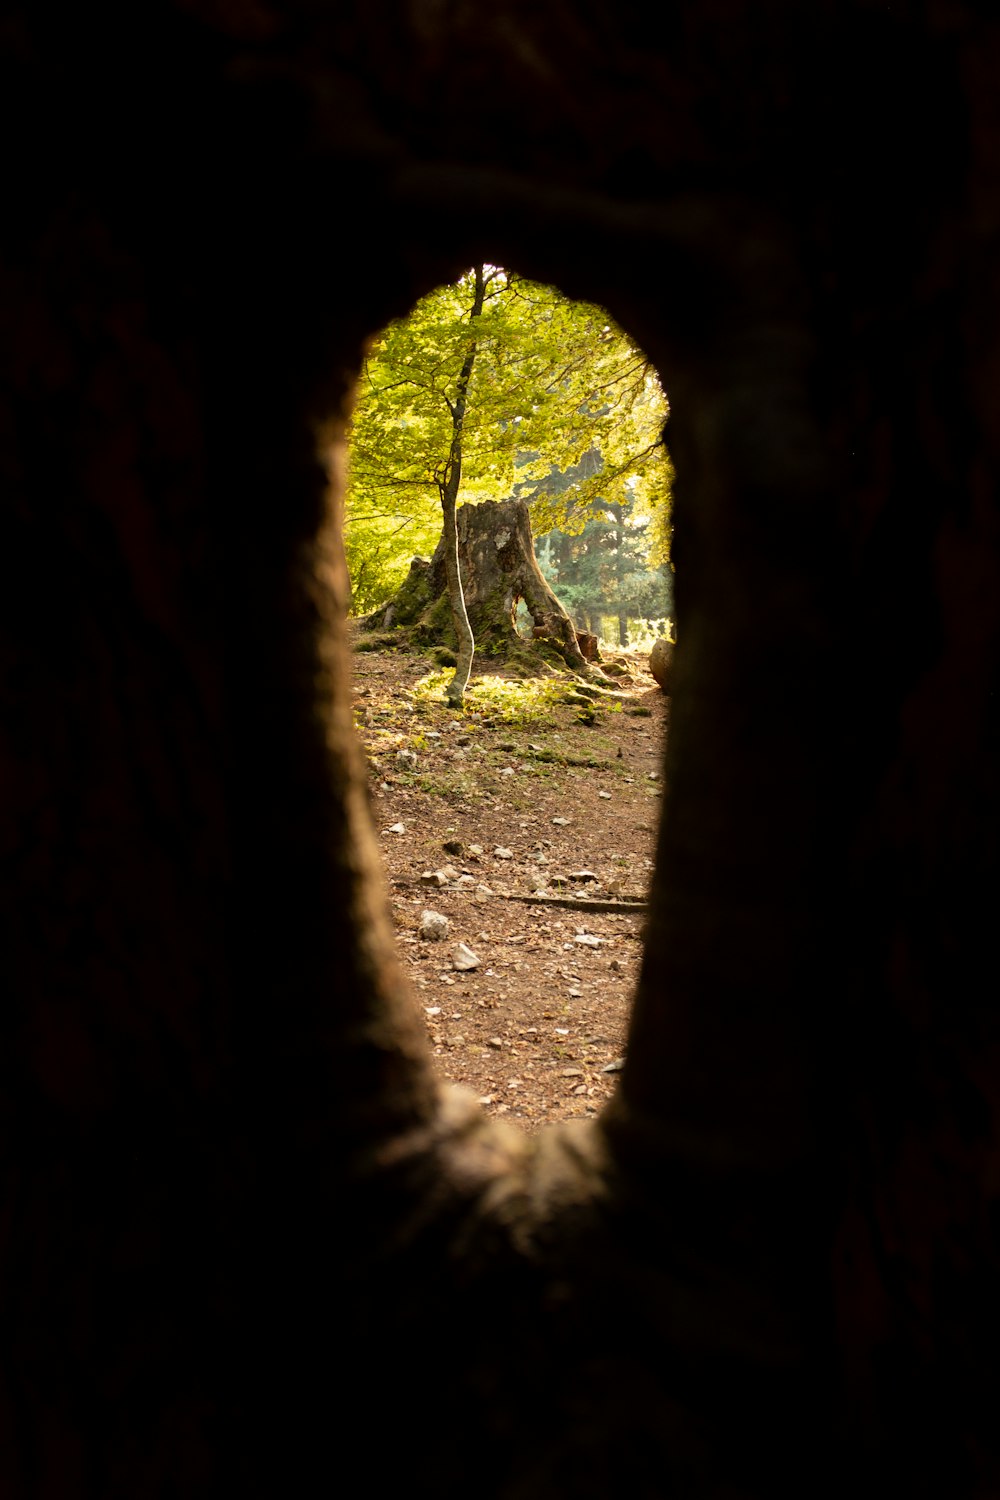 brown tree trunk during daytime